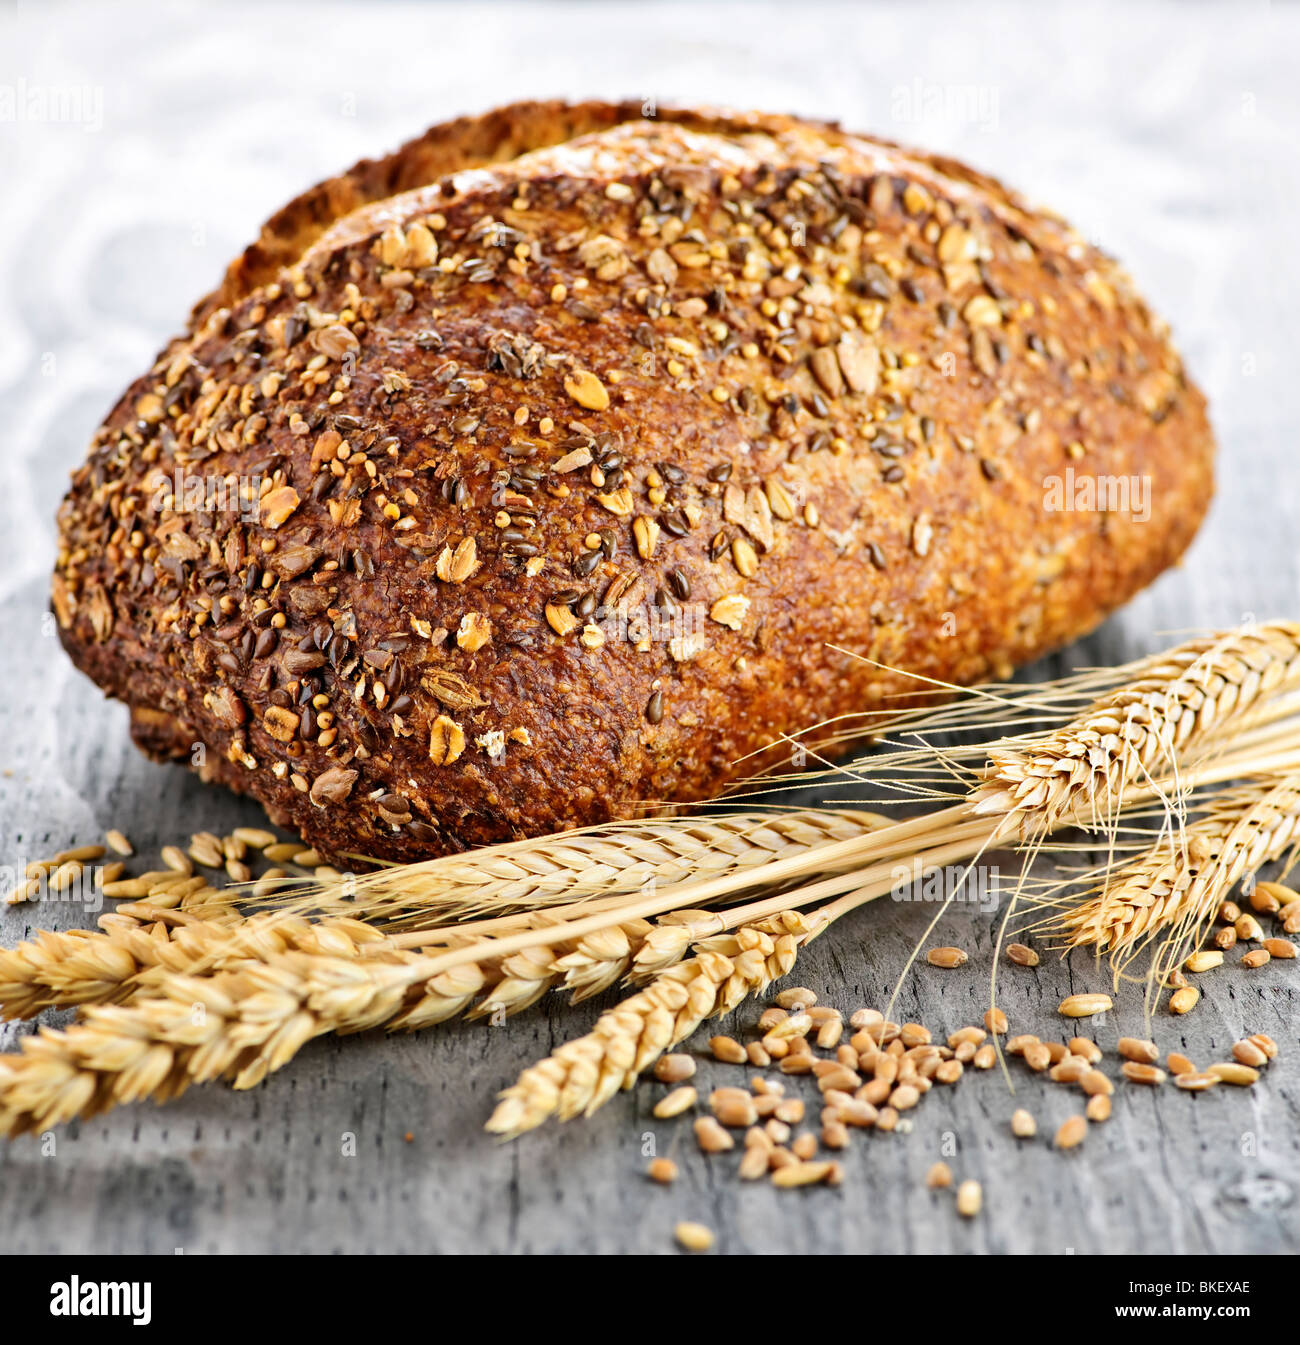 Loaf of fresh baked multigrain bread with grain ears Stock Photo